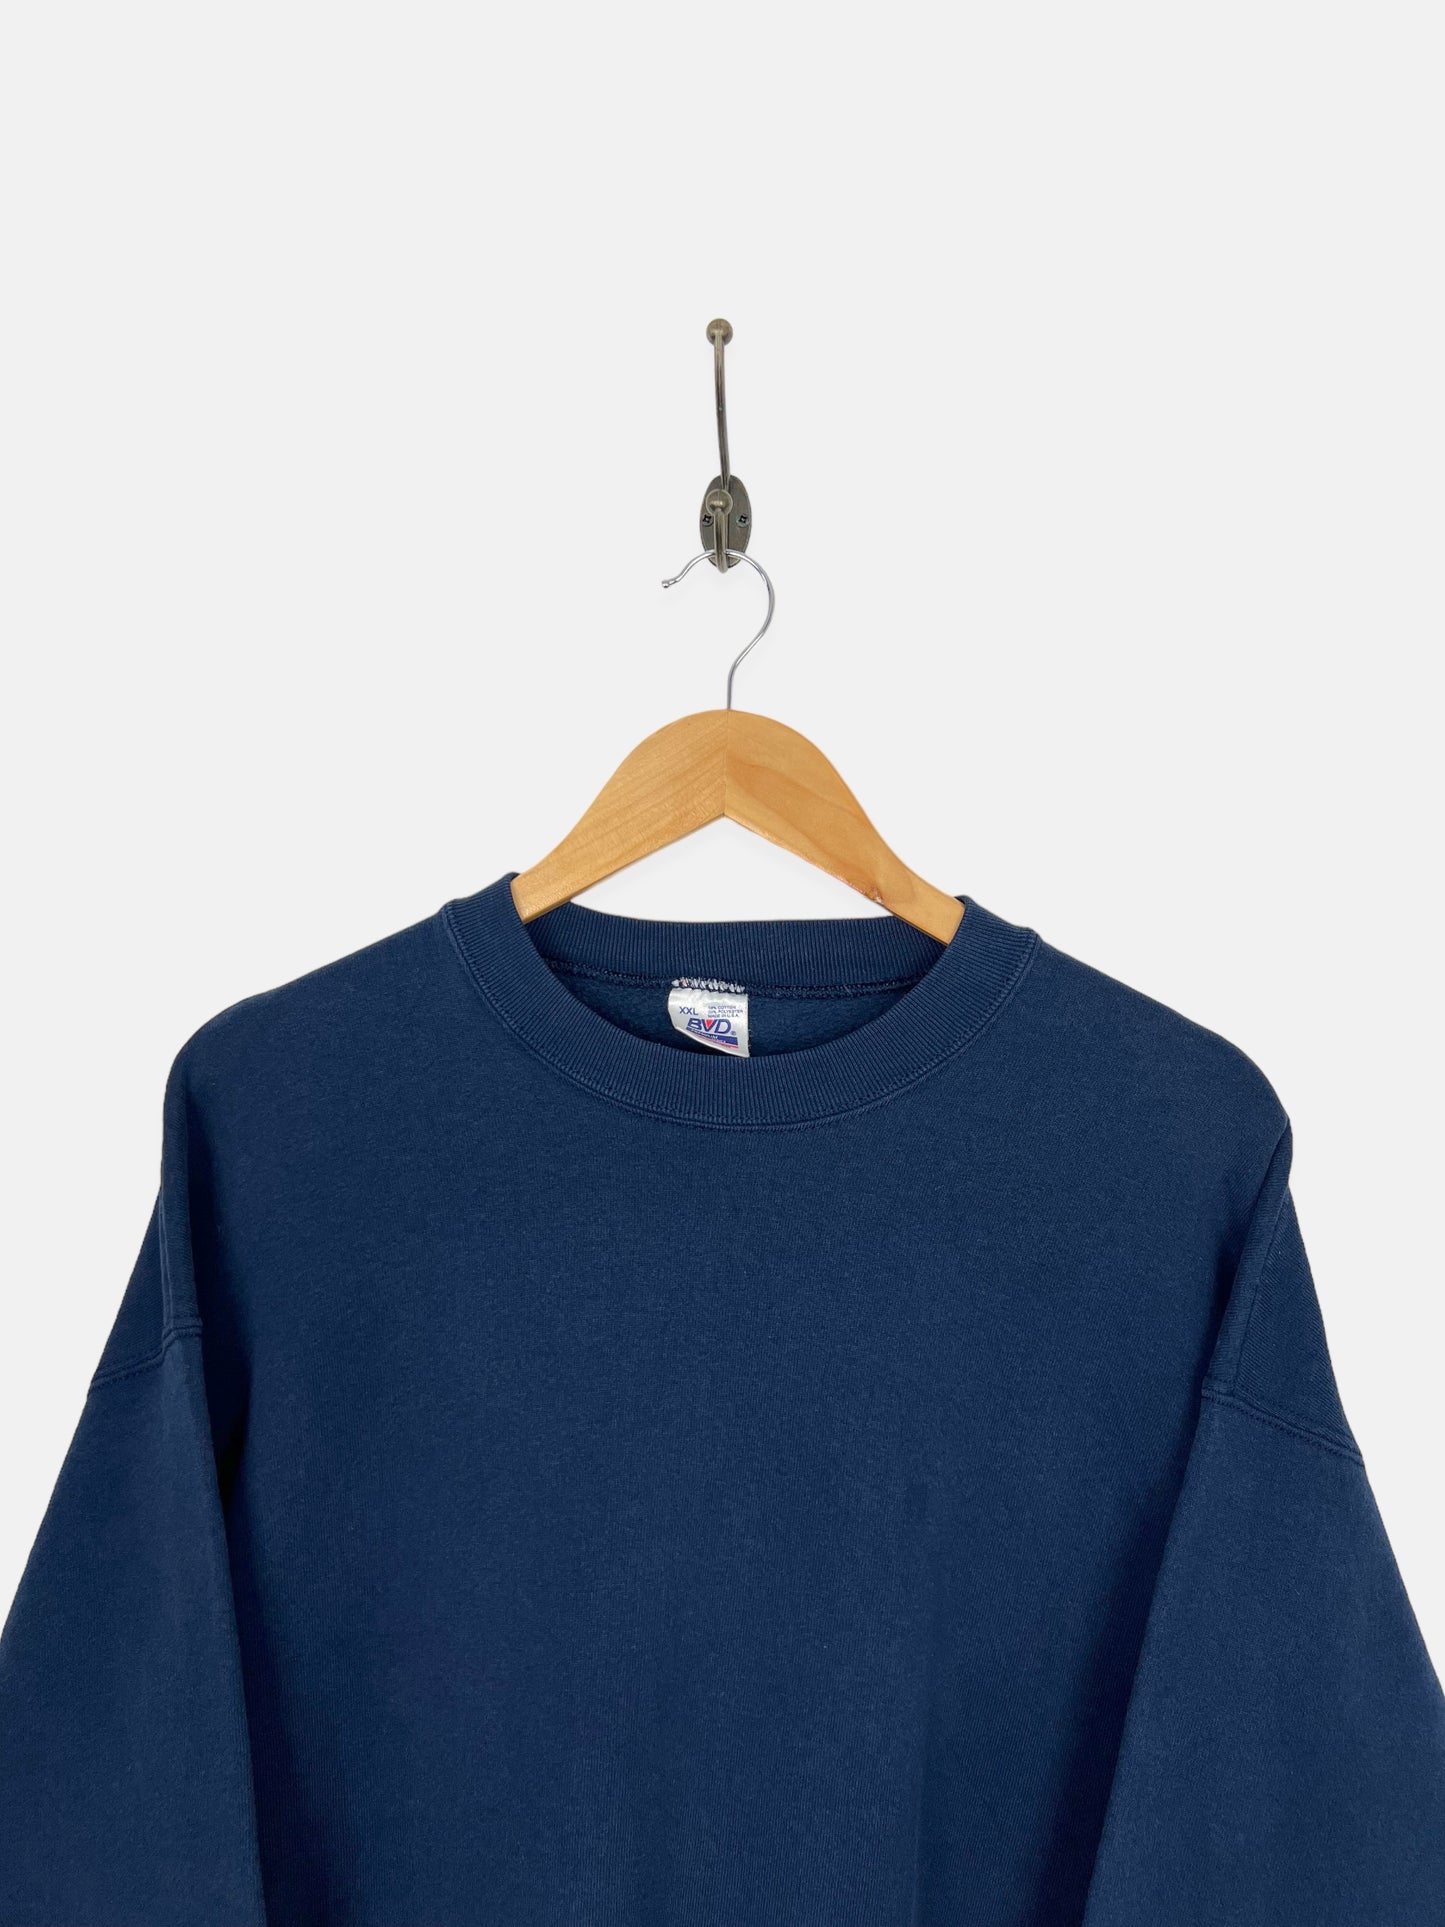 90's Navy USA Made Vintage Sweatshirt Size XL-2XL